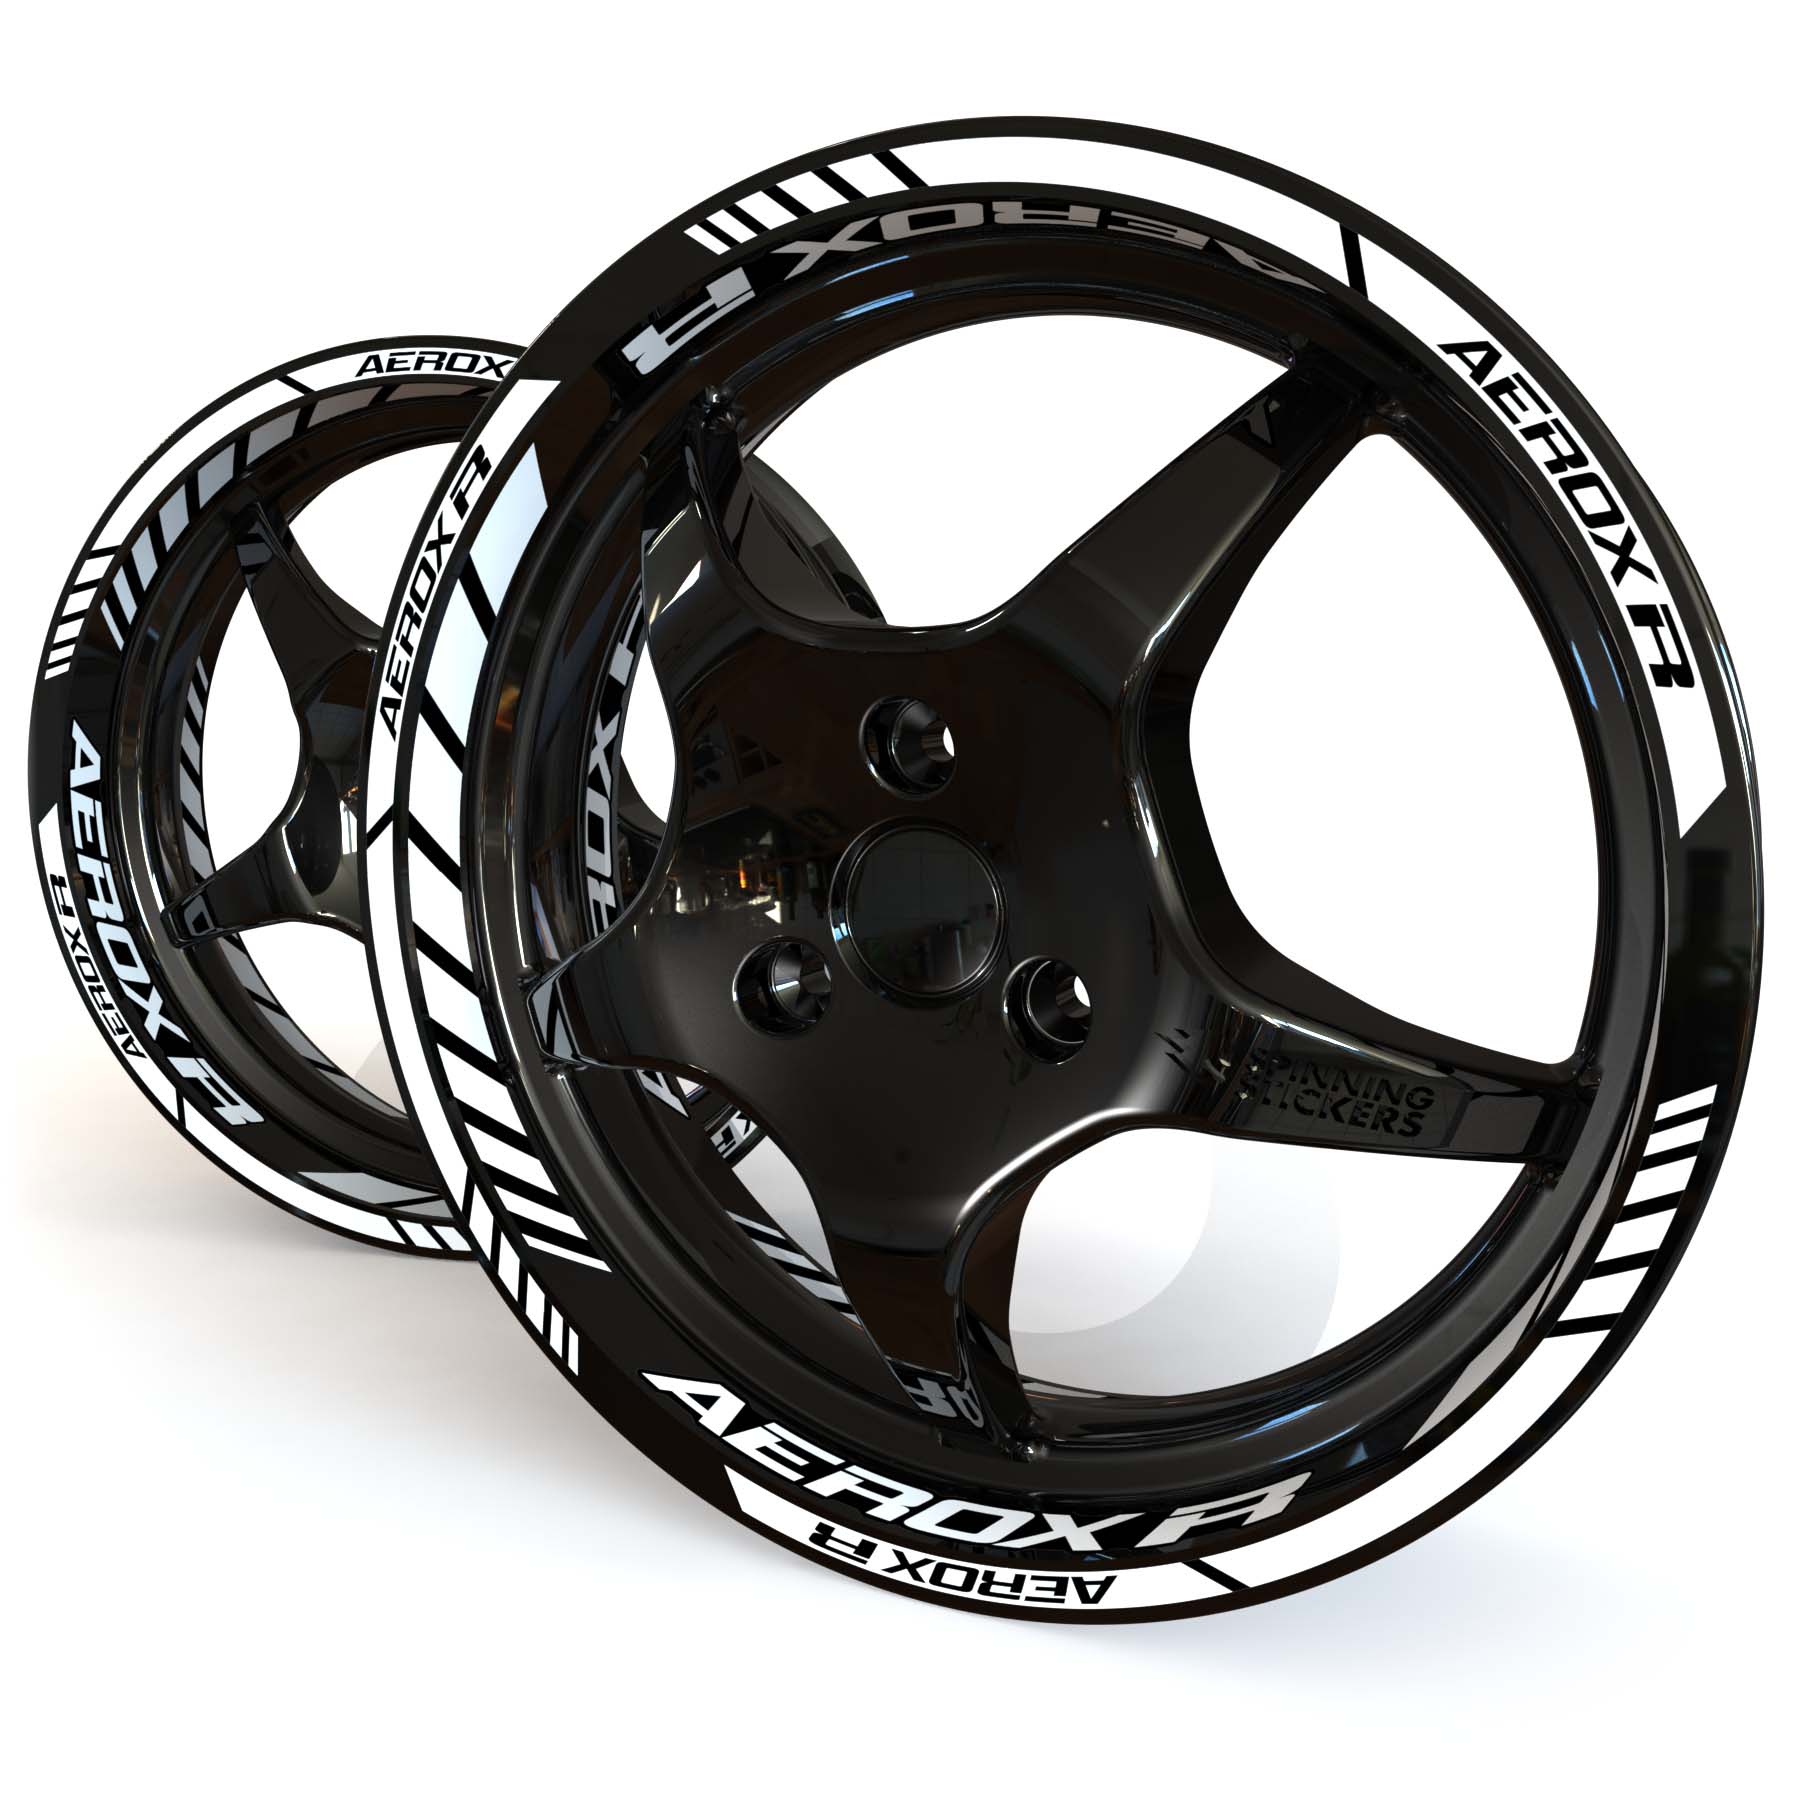 White Yamaha Aerox R wheel stickers on a black 12 inch moped rim